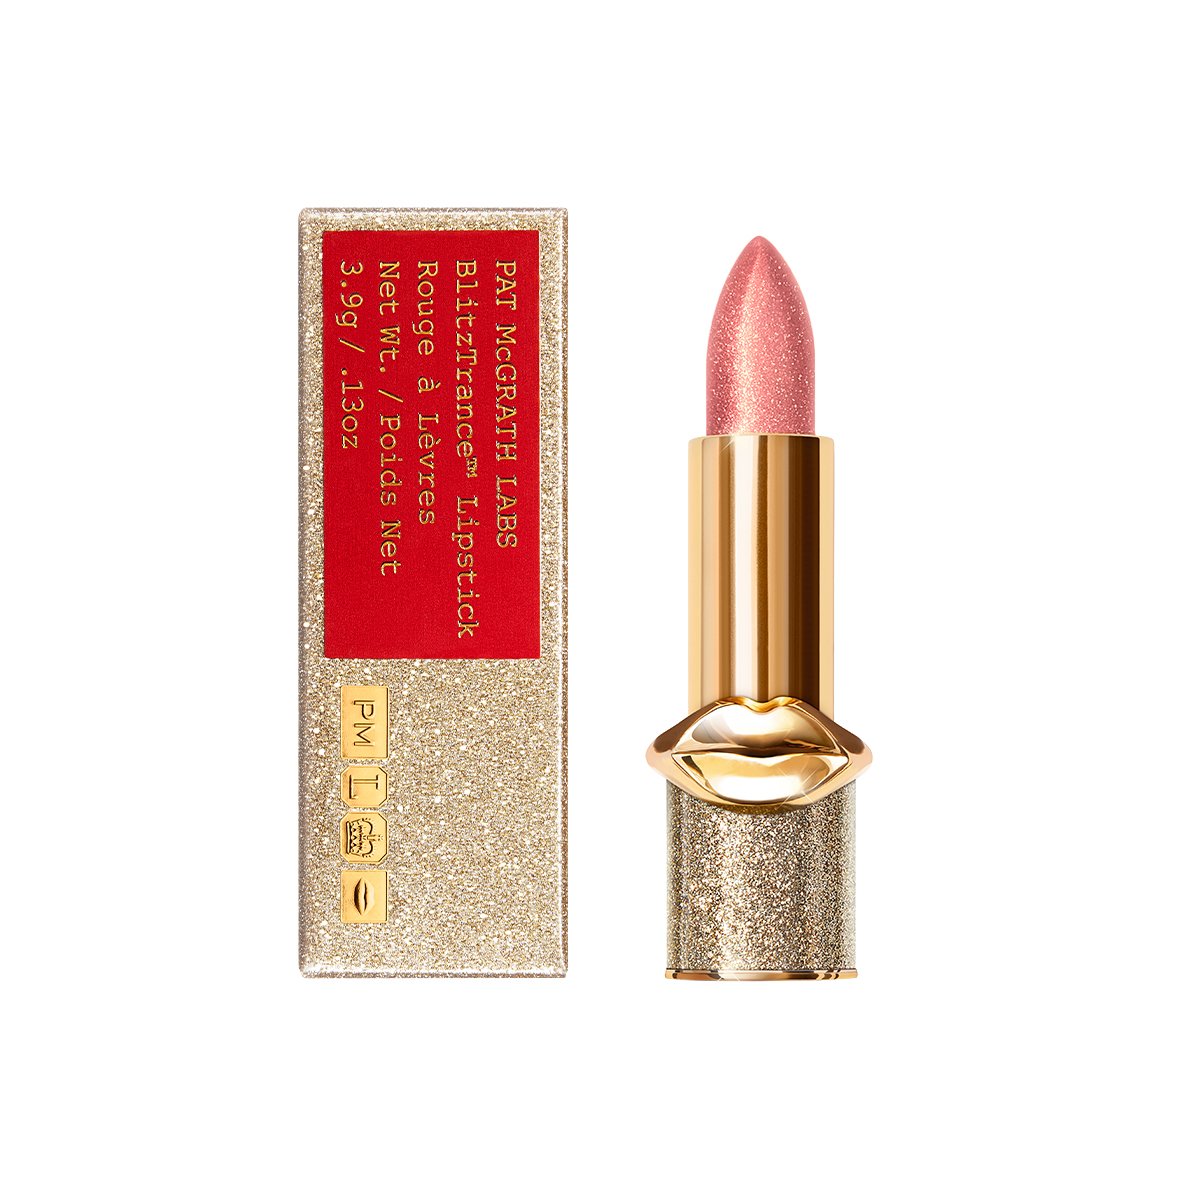 Pat McGrath BlitzTrance NUDE ROMANTIQUE Lipstick (Coral Rose with Golden Pink Pearl)